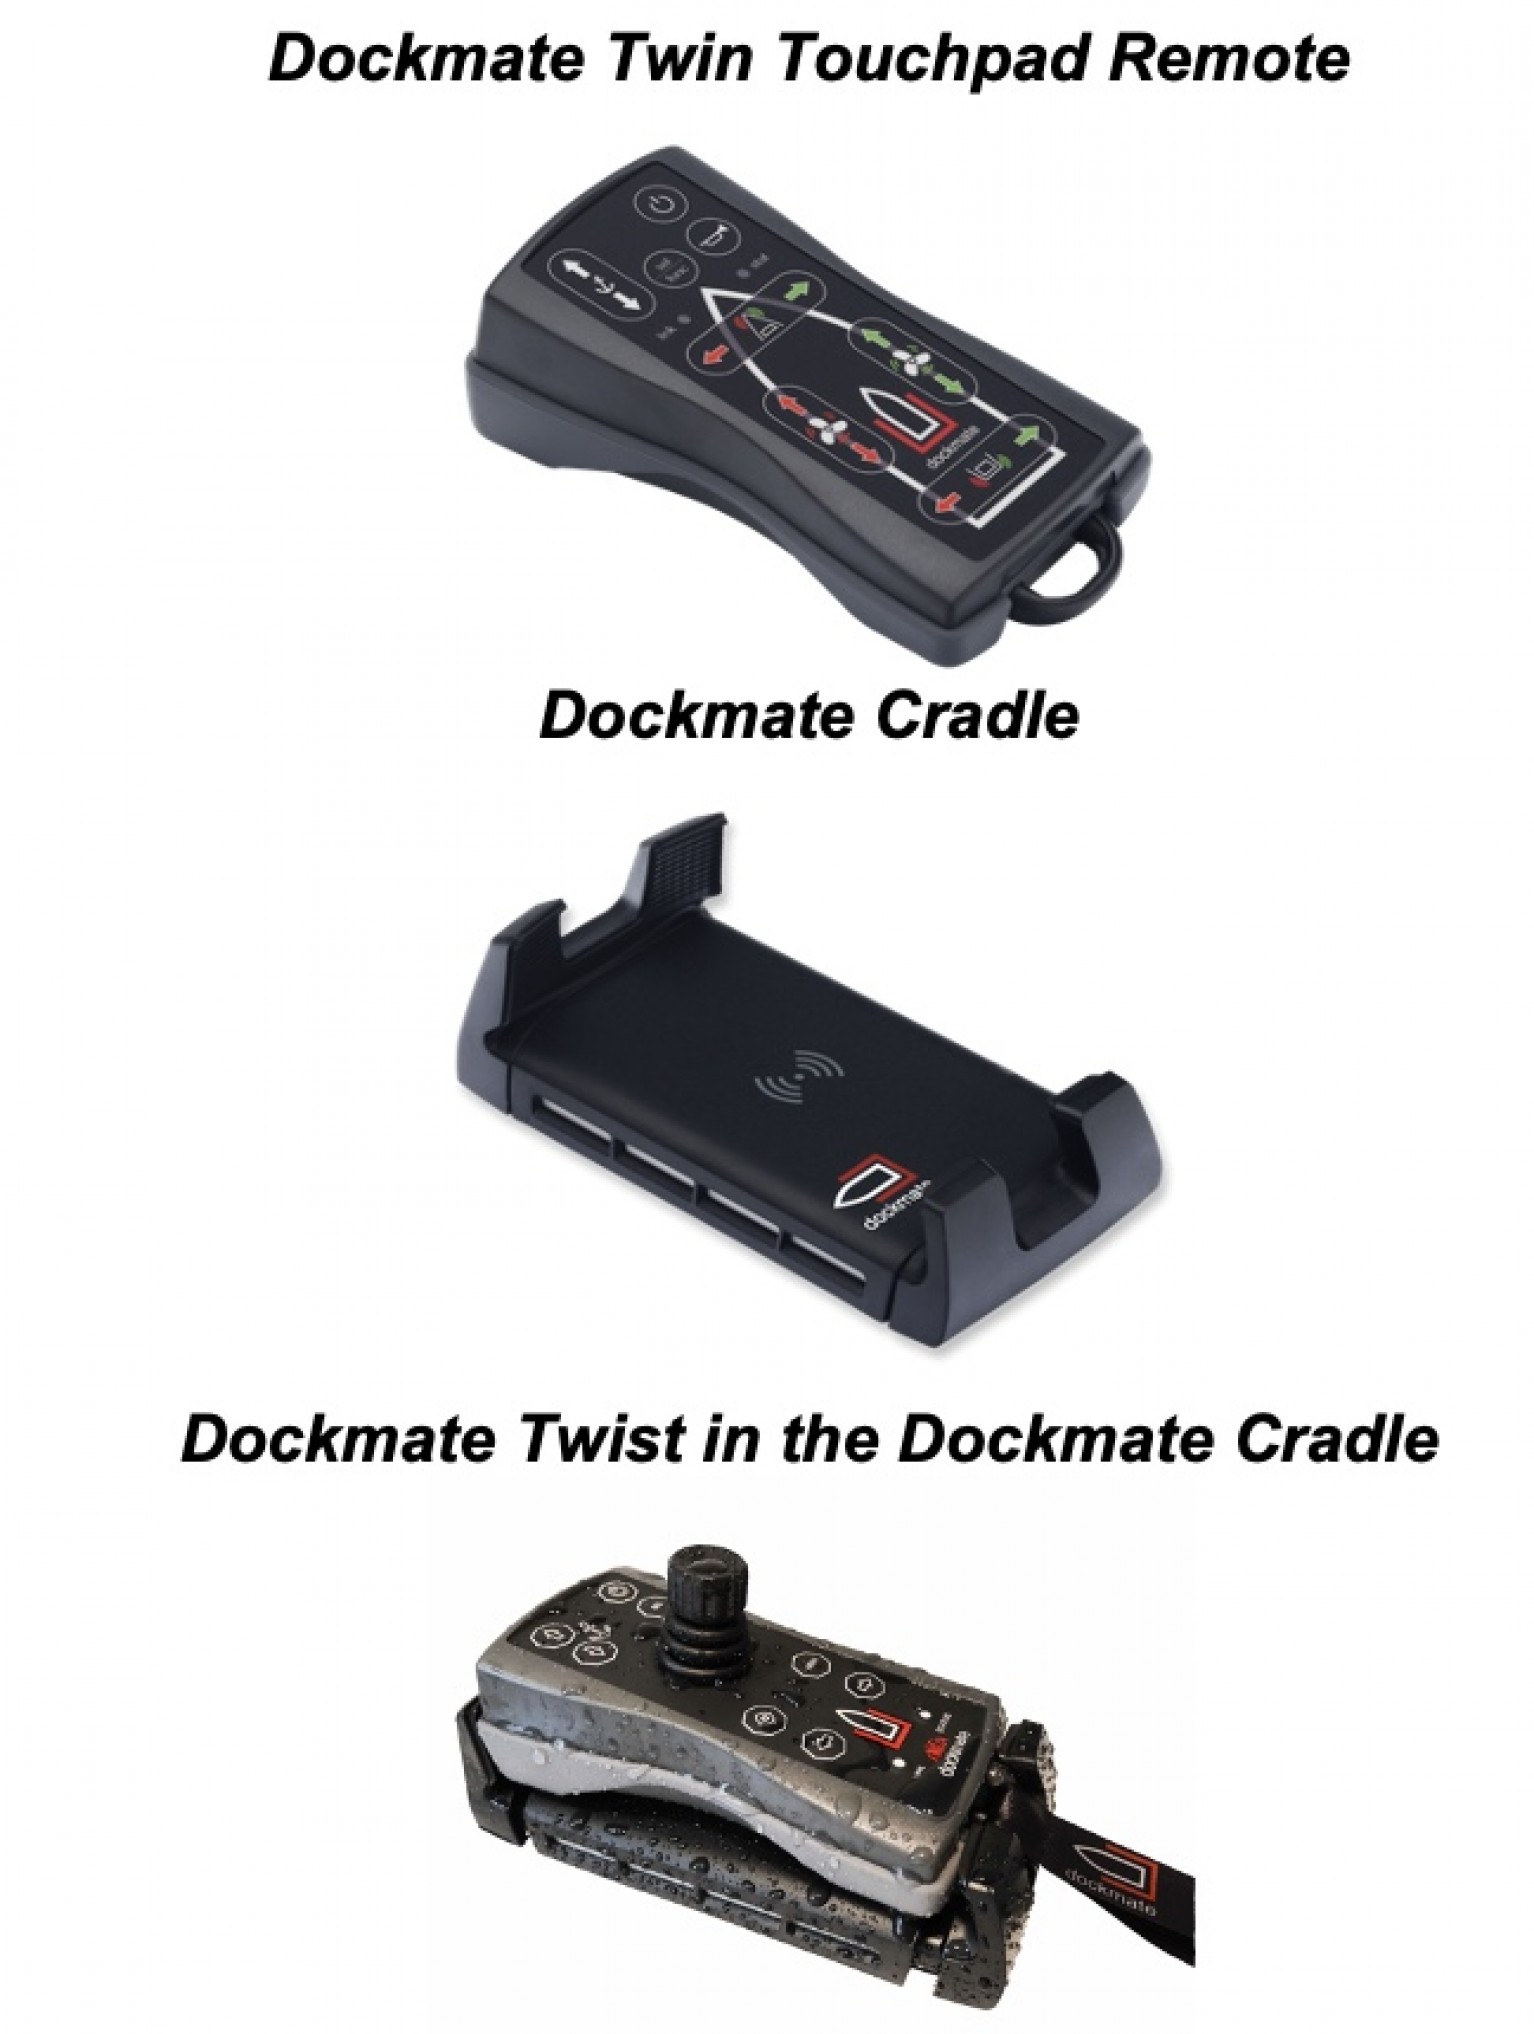 dockmate remote control